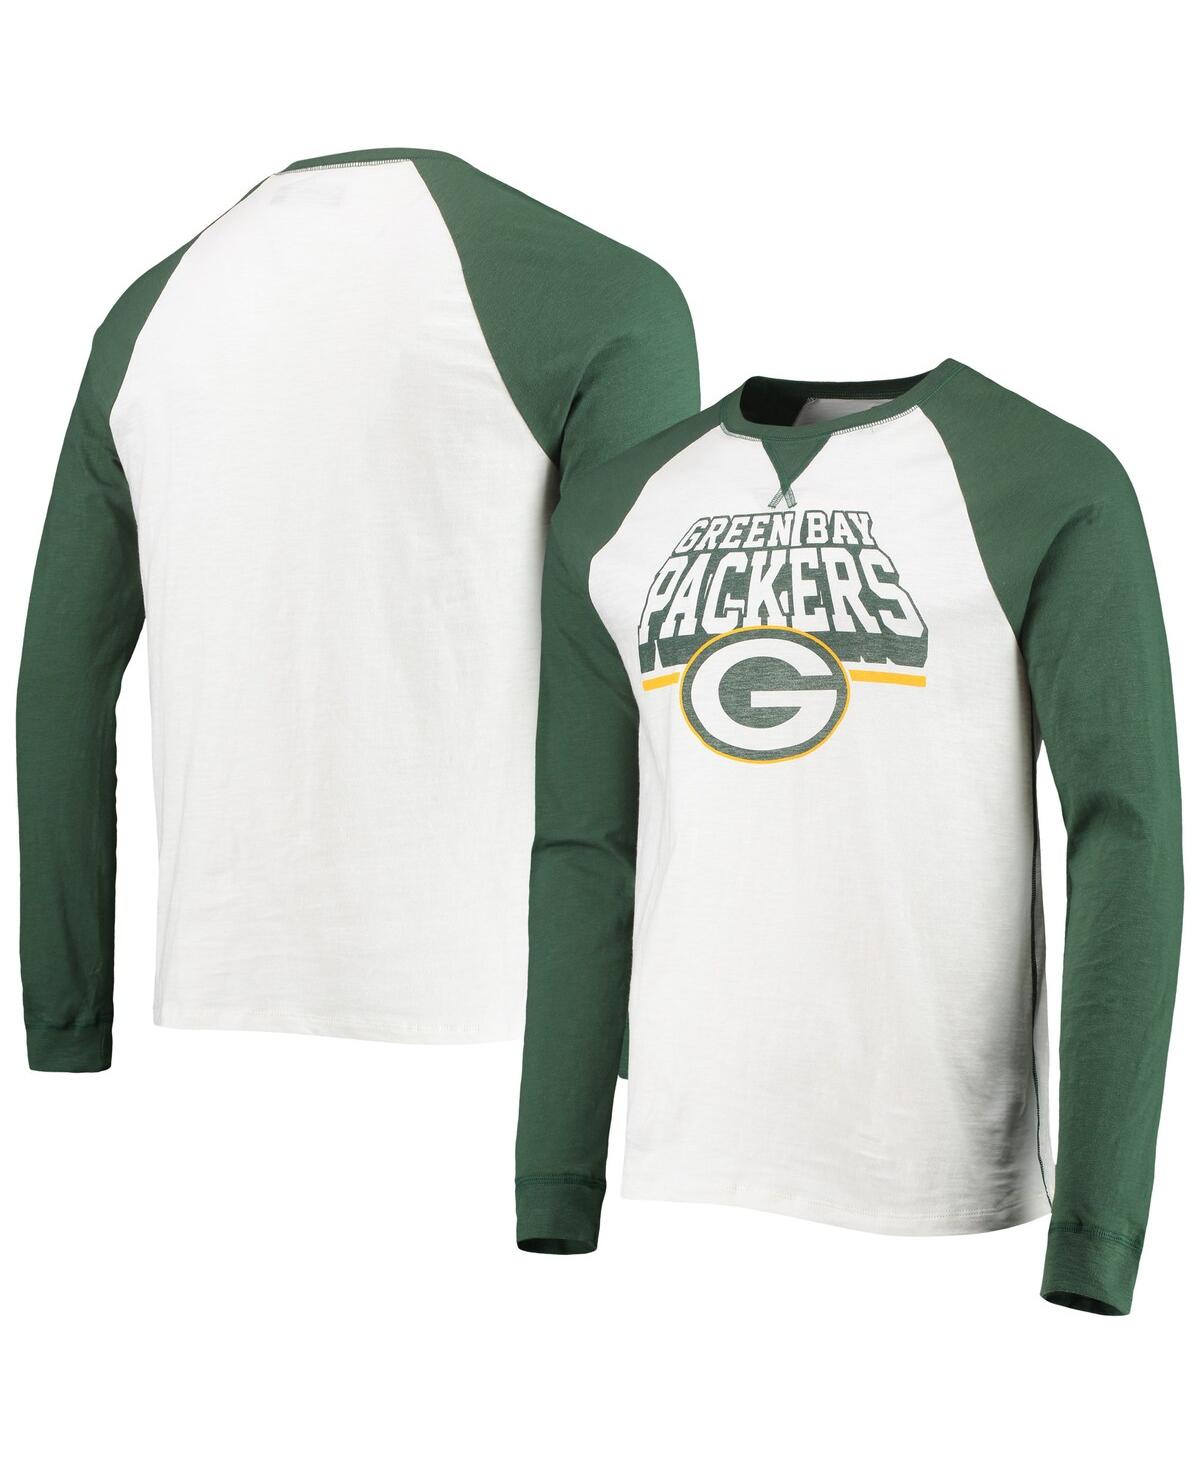 Men's Junk Food White, Green Bay Packers Colorblock Raglan Long Sleeve T-shirt - White, Green